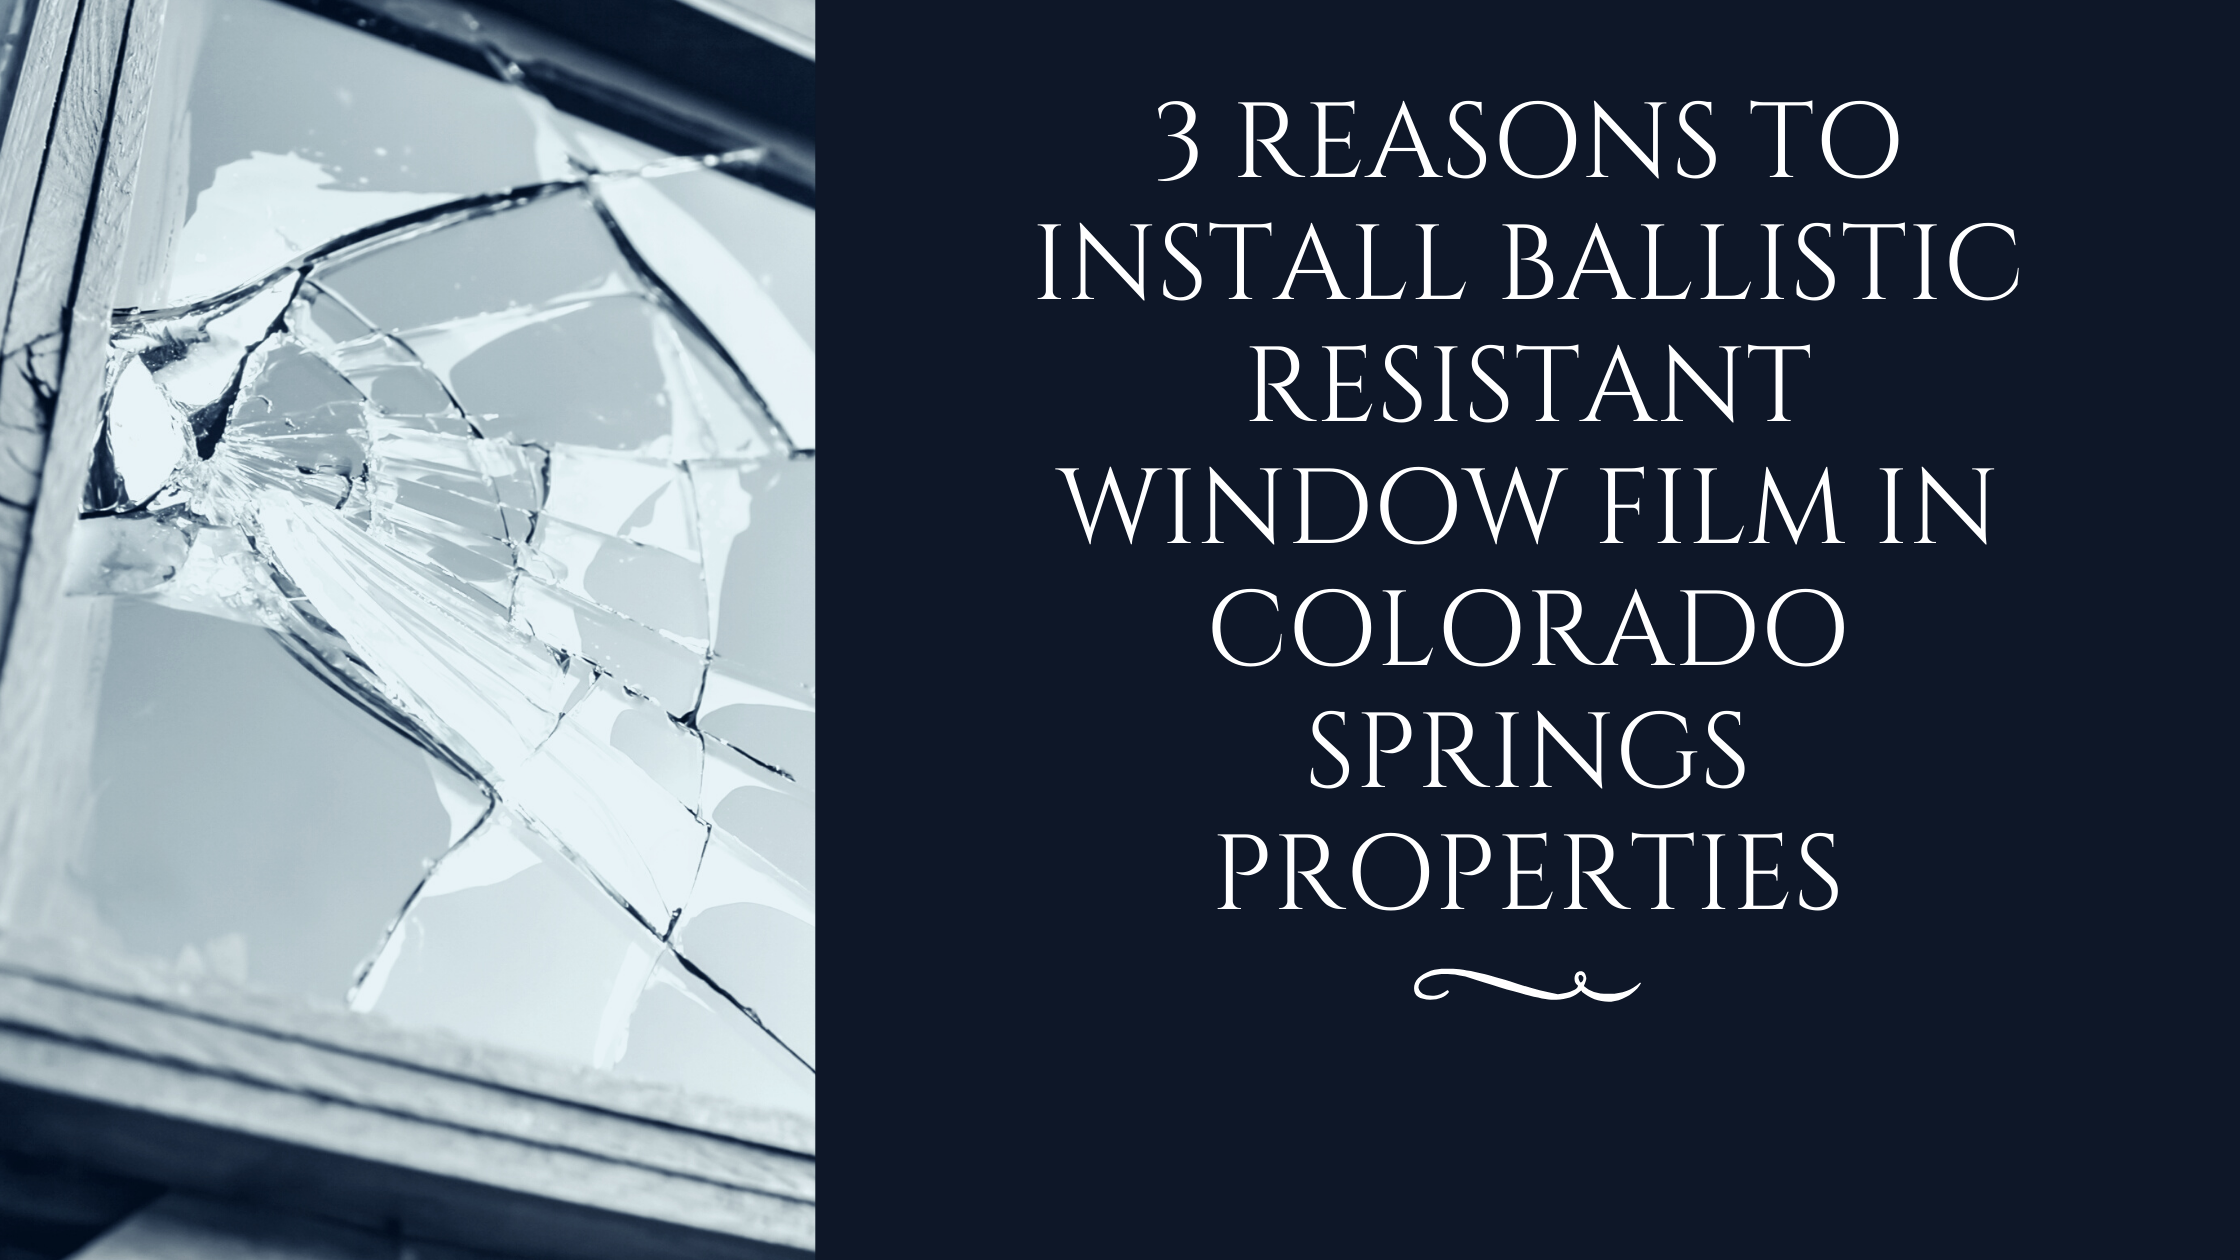 3 Reasons to Install Ballistic Resistant Window Film In Colorado Springs Properties